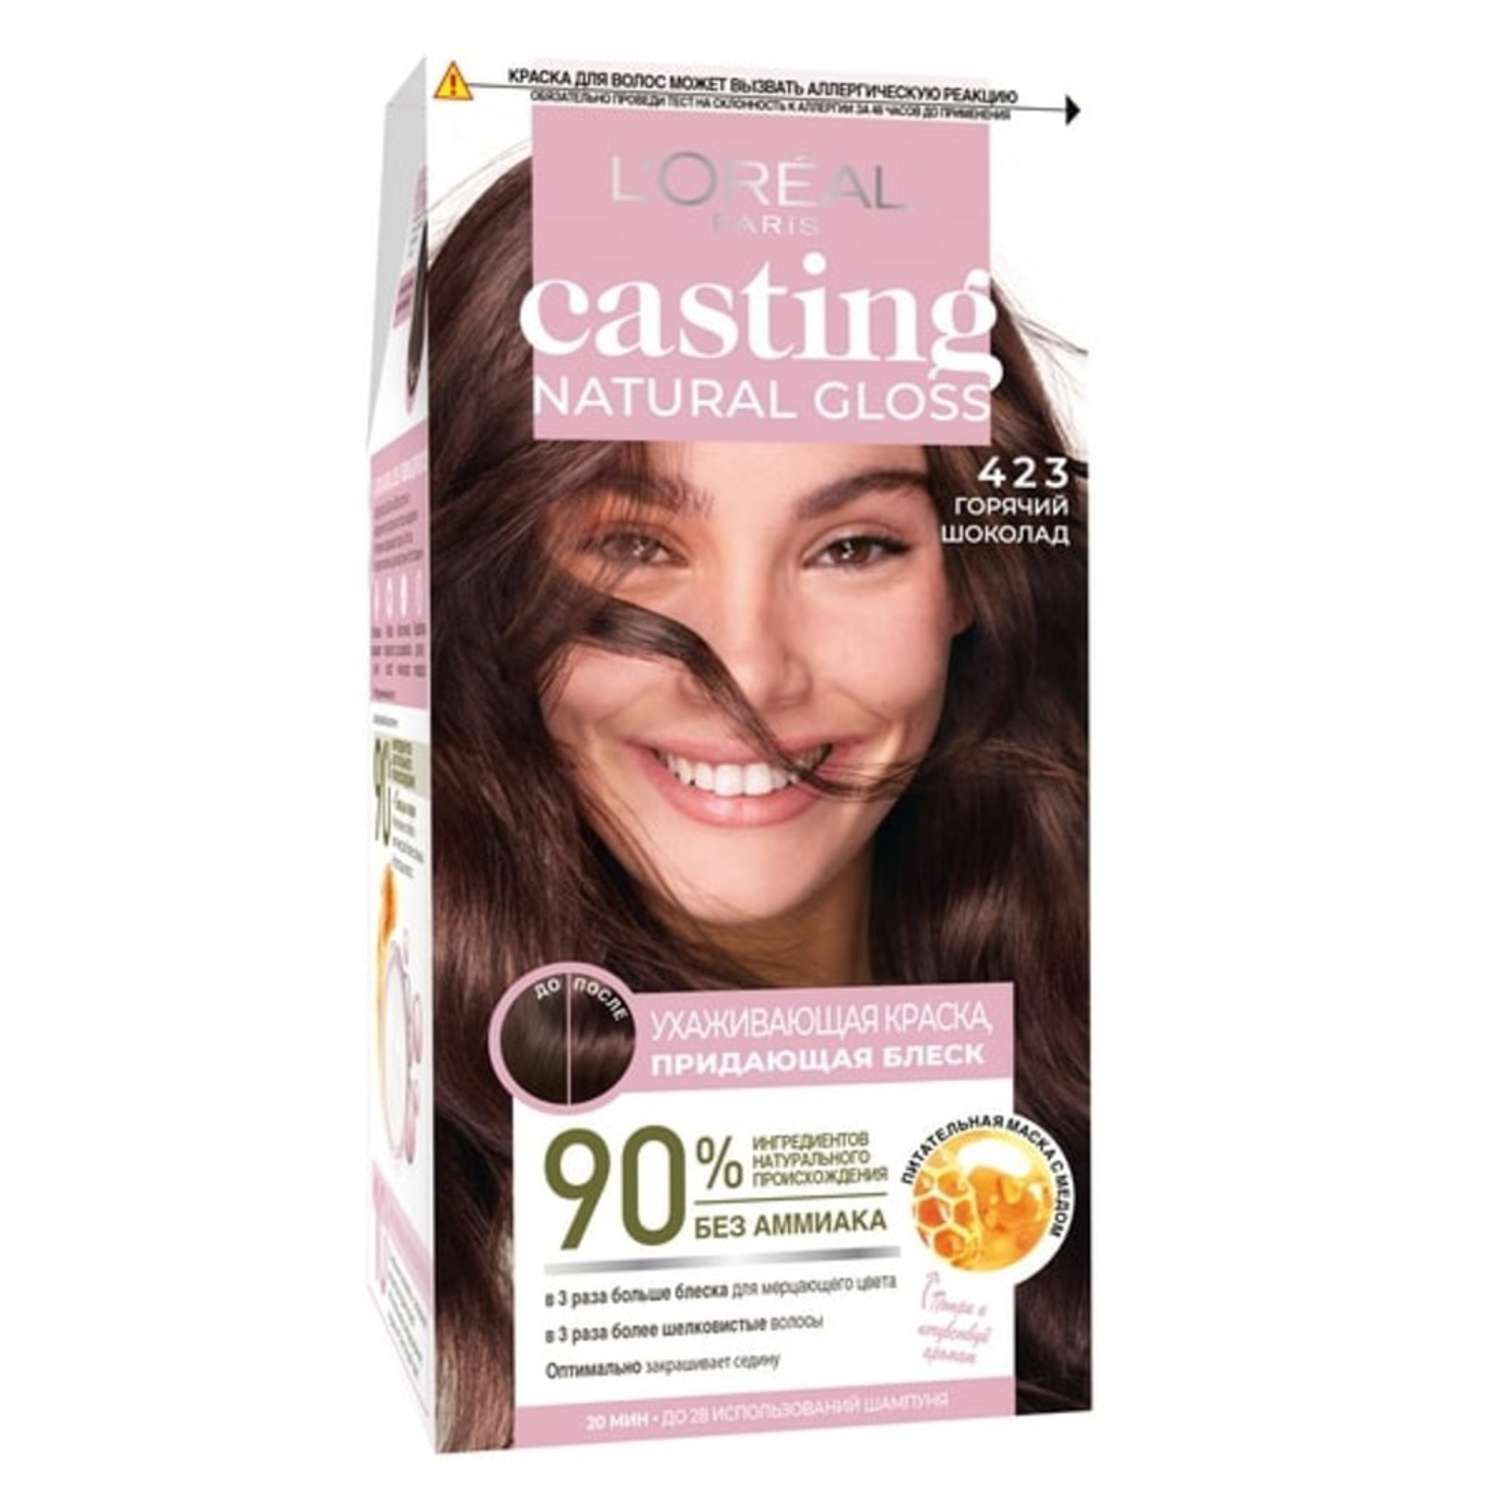 Краска-уход для волос LOREAL Casting Natural Gloss оттенок 423 Горячий шоколад - фото 1